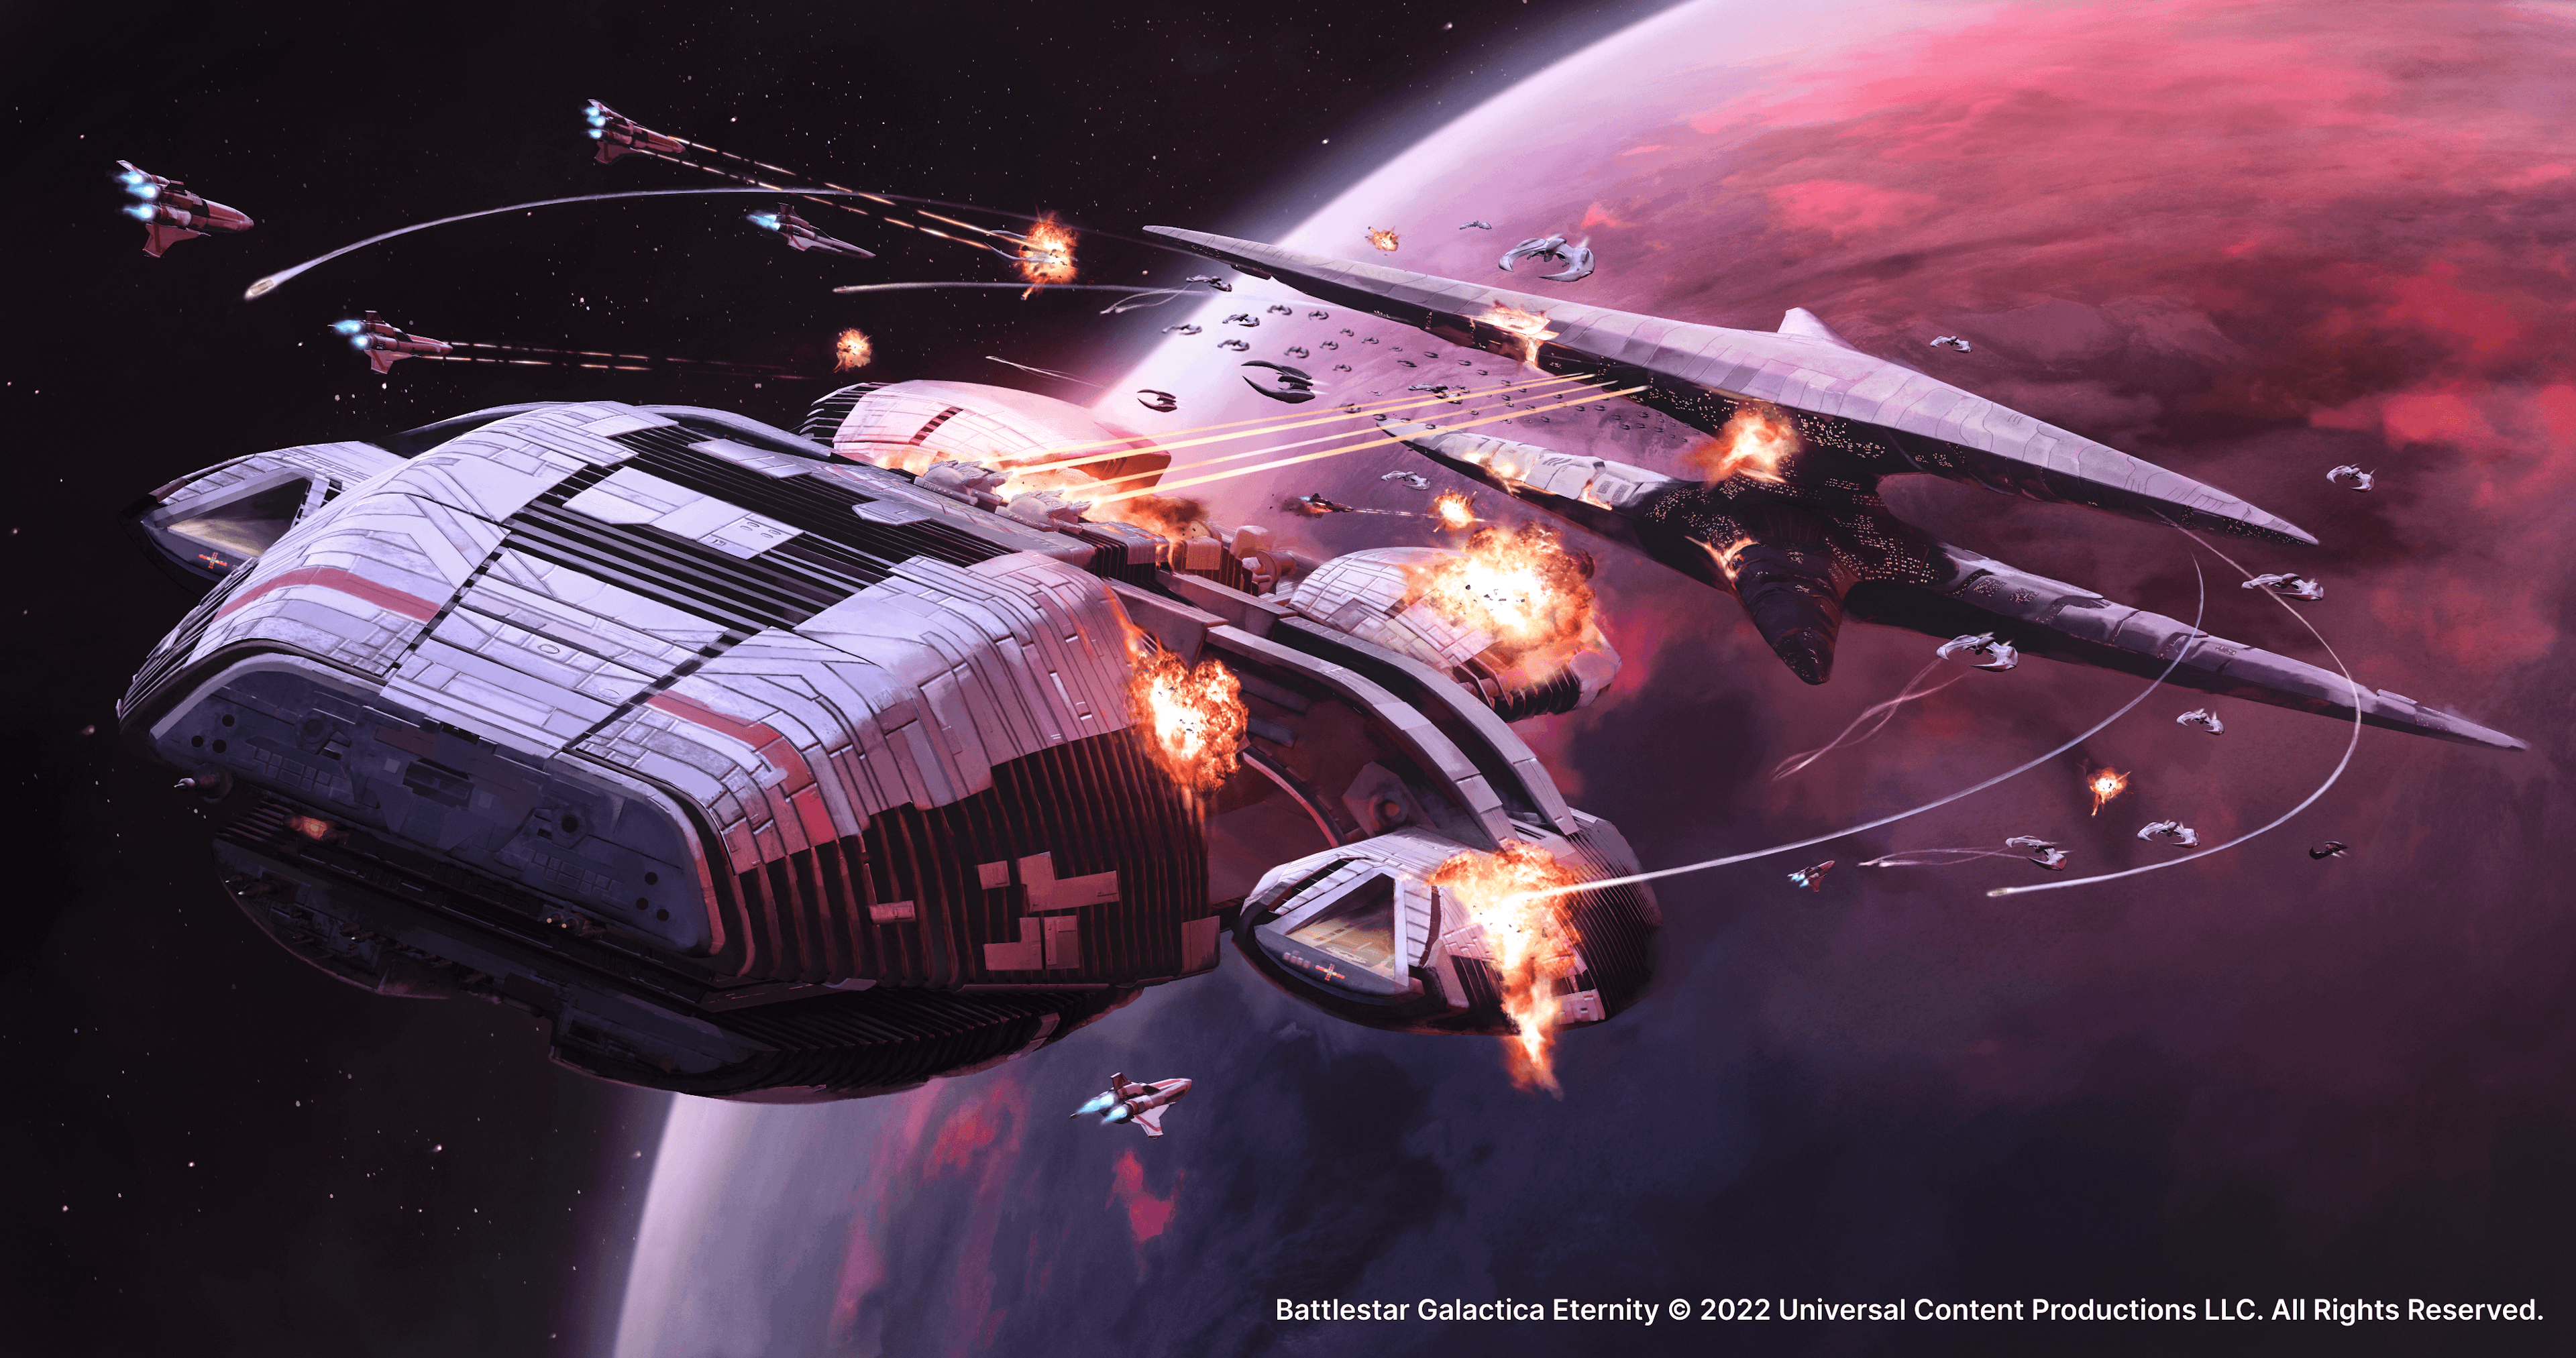 Battlestar Galactica Eternity game image 2.png